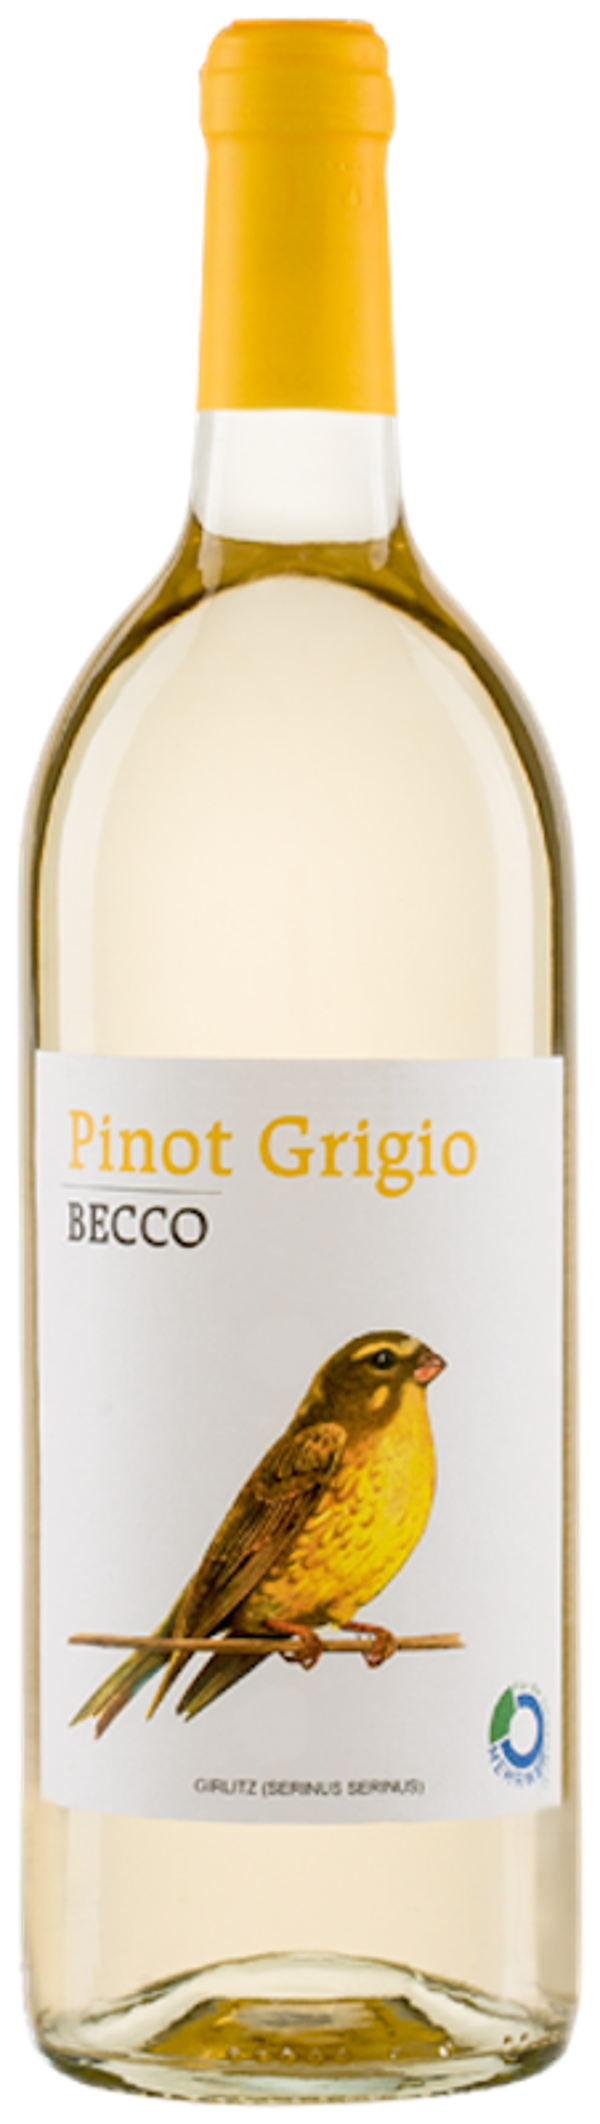 Produktfoto zu BECCO Pinot Grigio IGT 2021_20